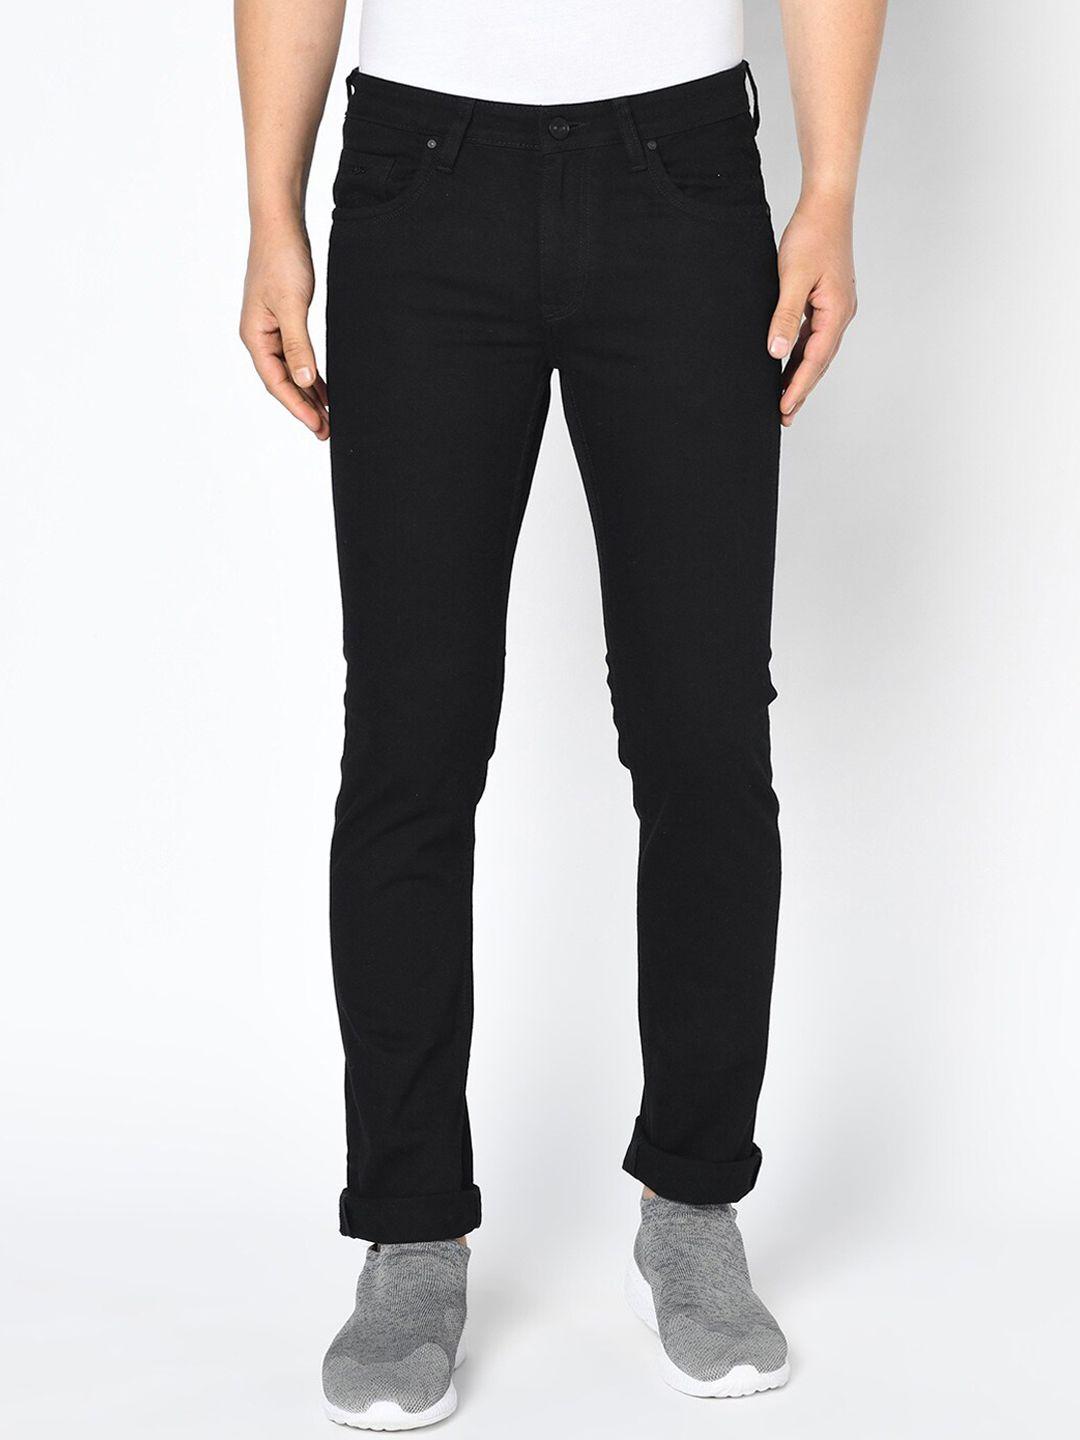 blackberrys-men-black-slim-fit-low-rise-clean-look-jeans